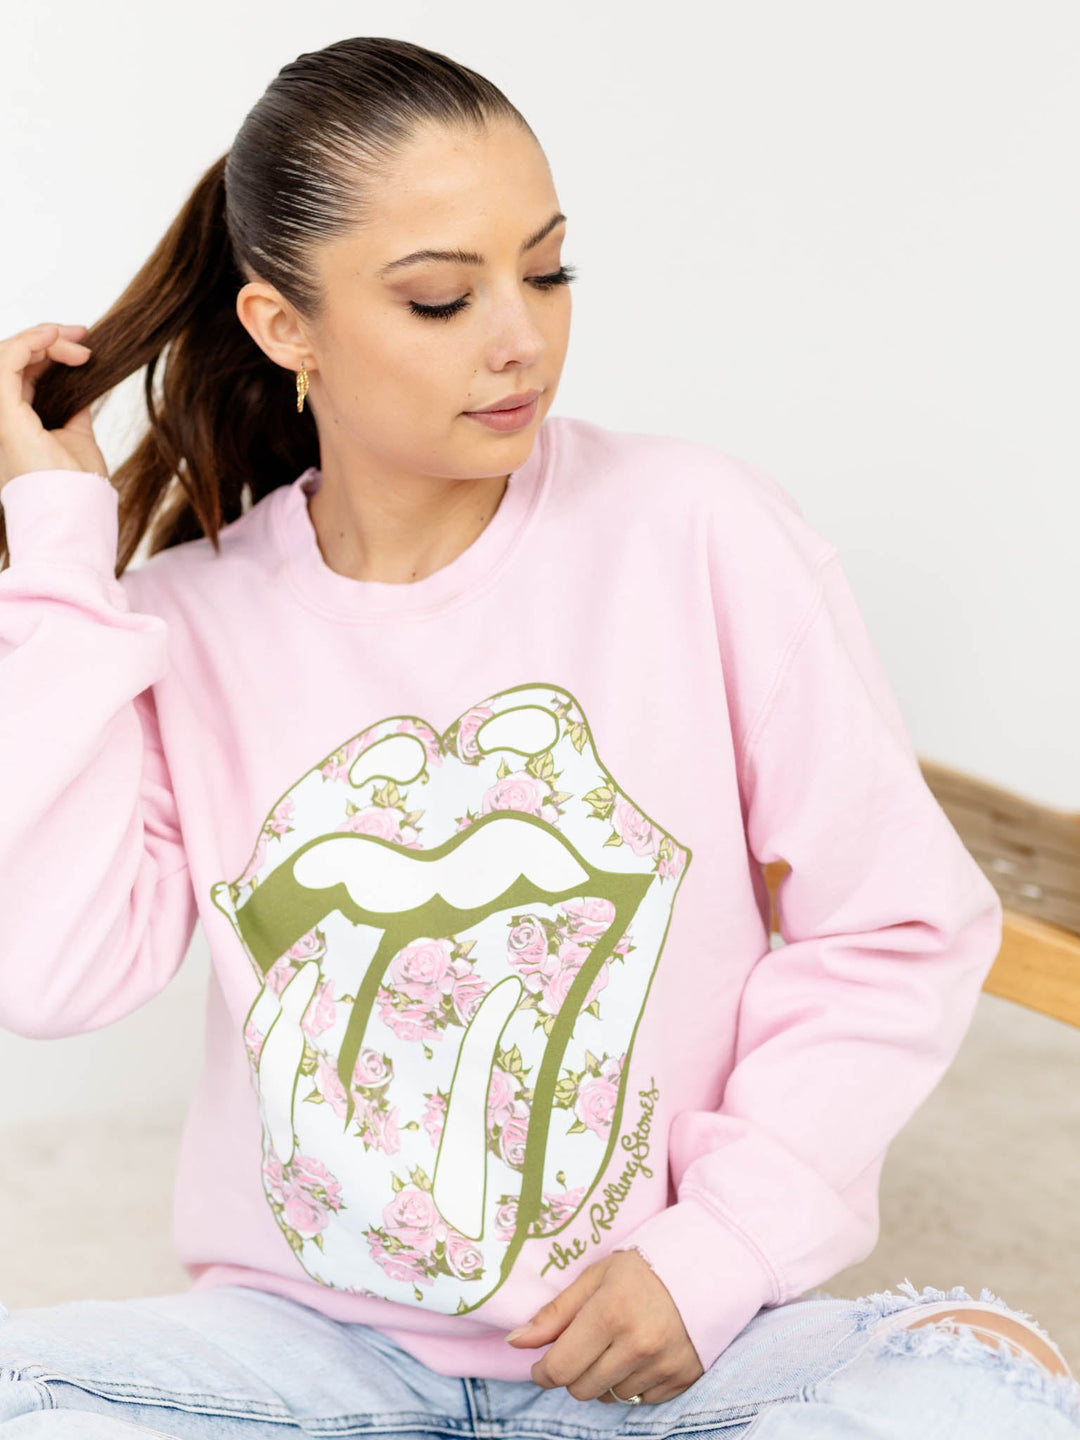 Rolling Stones Floral Lick Graphic SweatshirtScreen tees